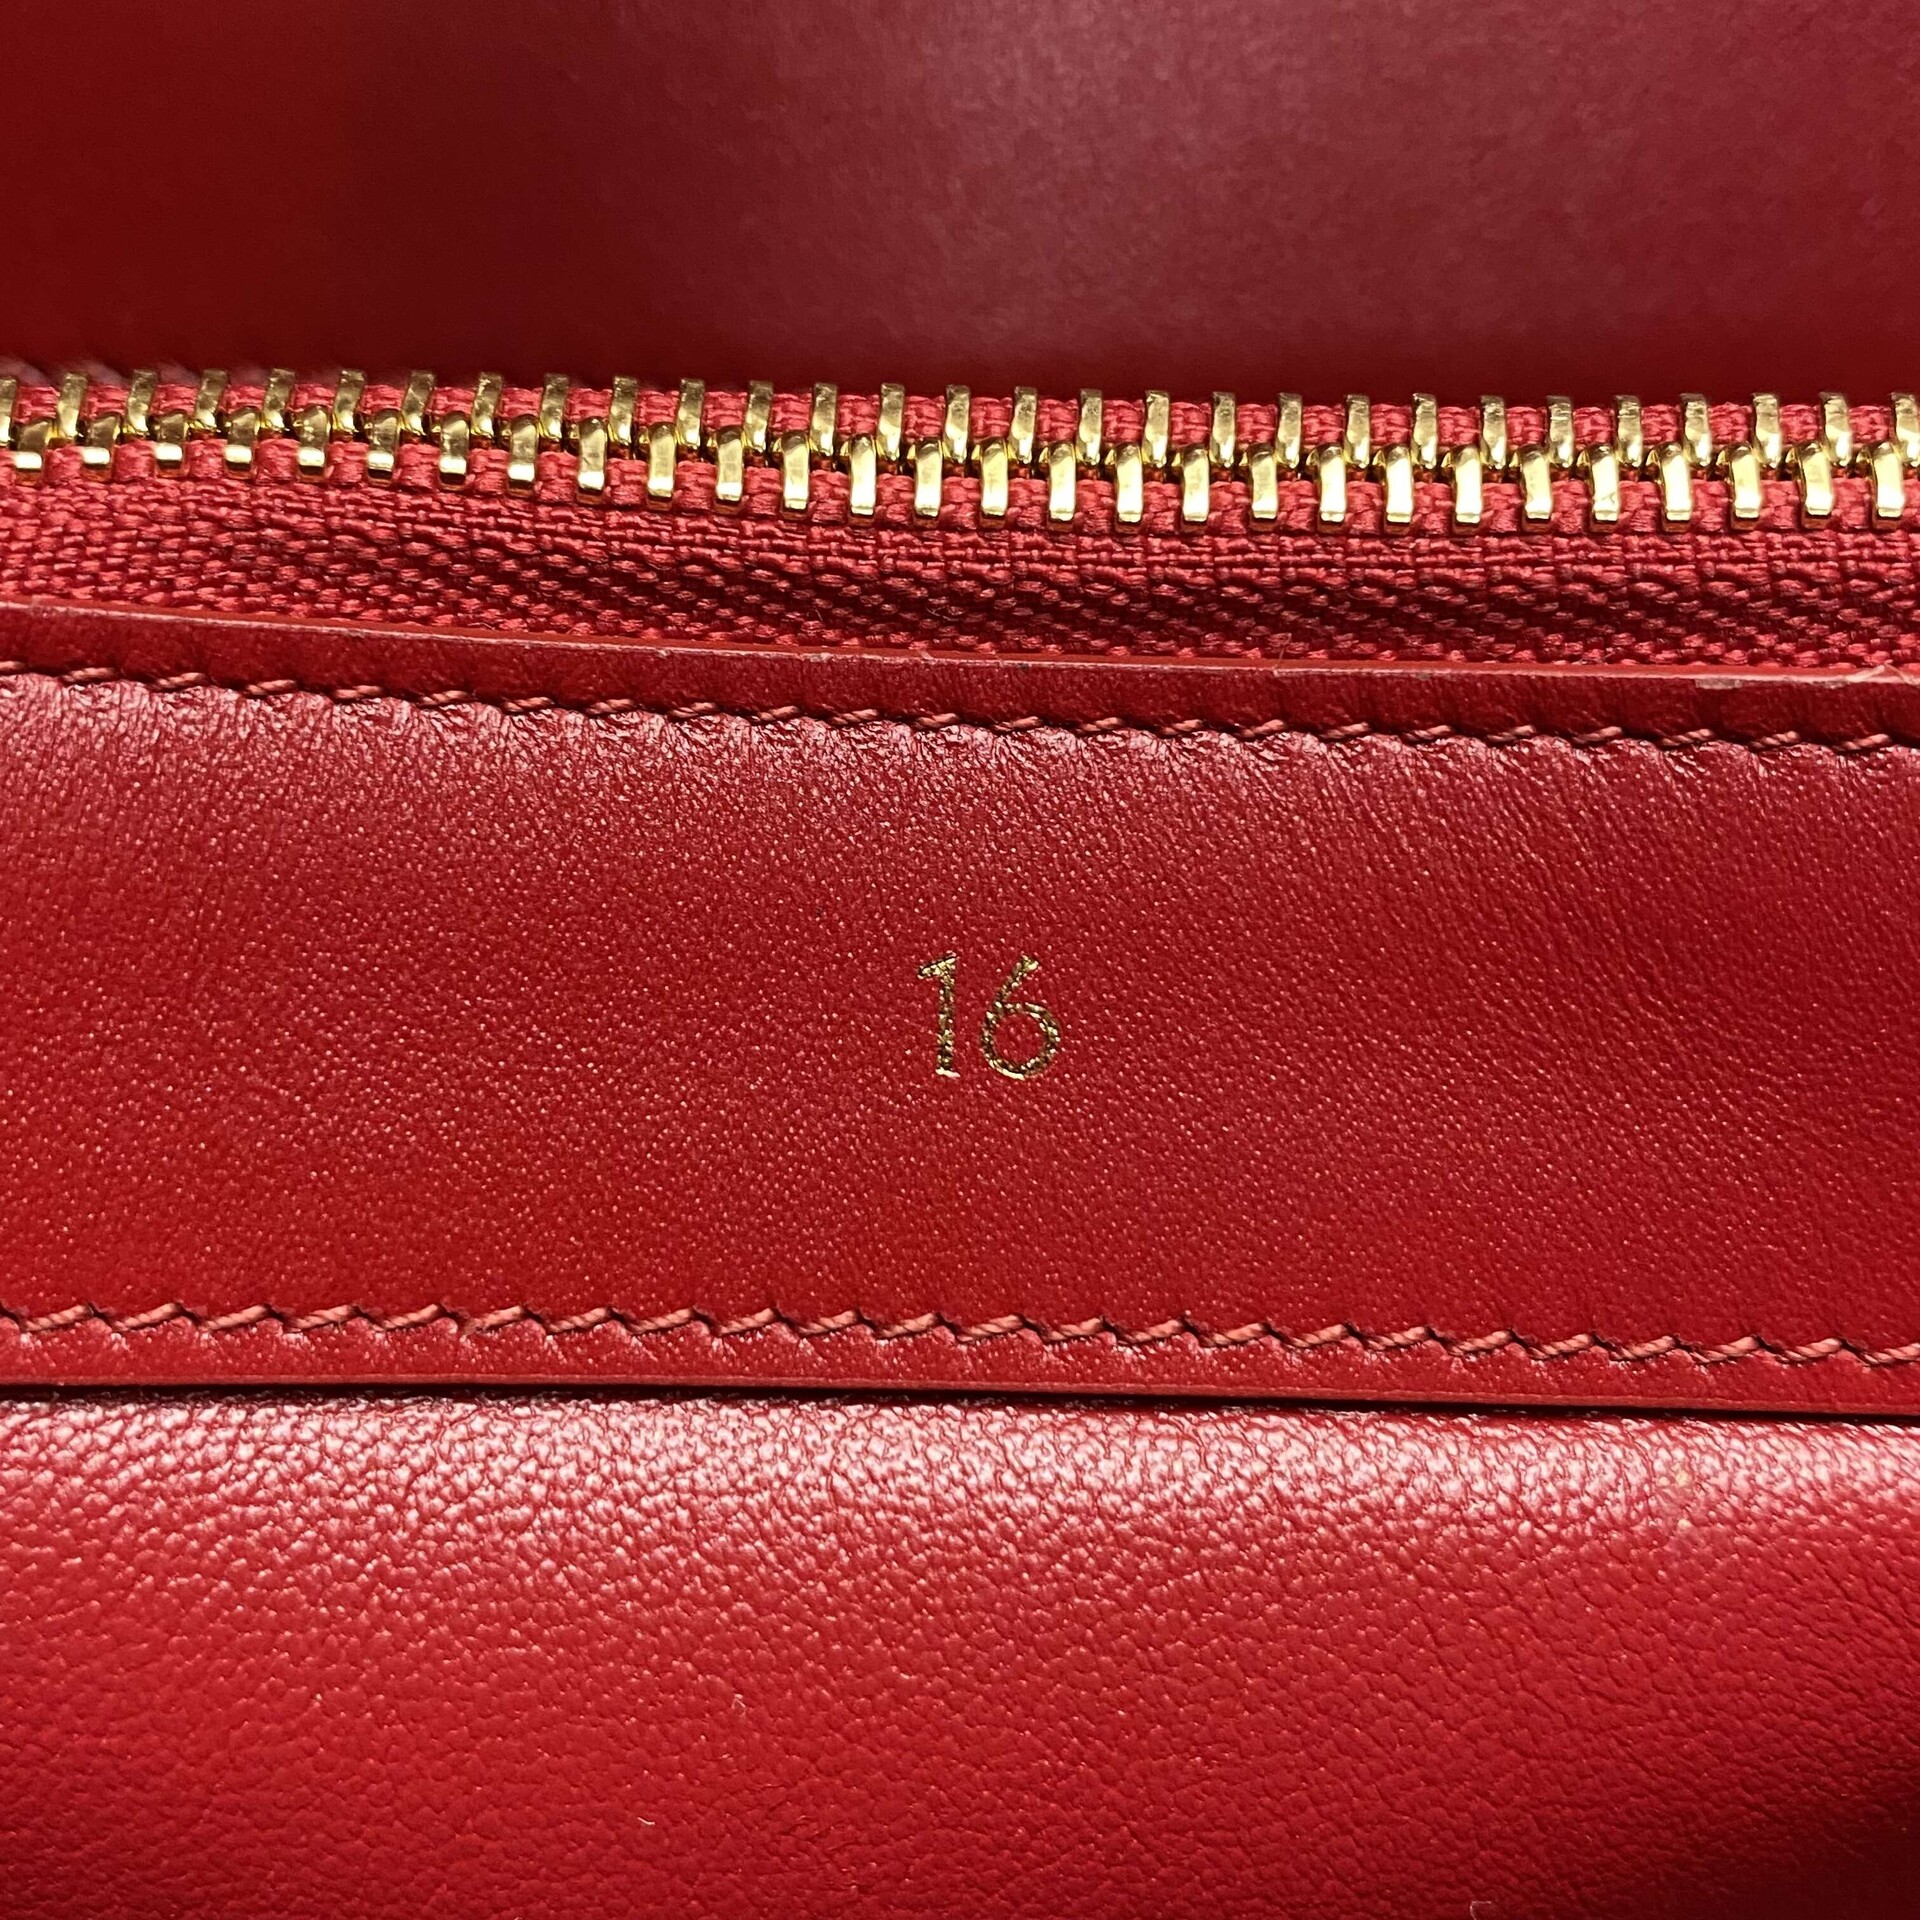 Bolsa Celine Mini 16 Vermelha